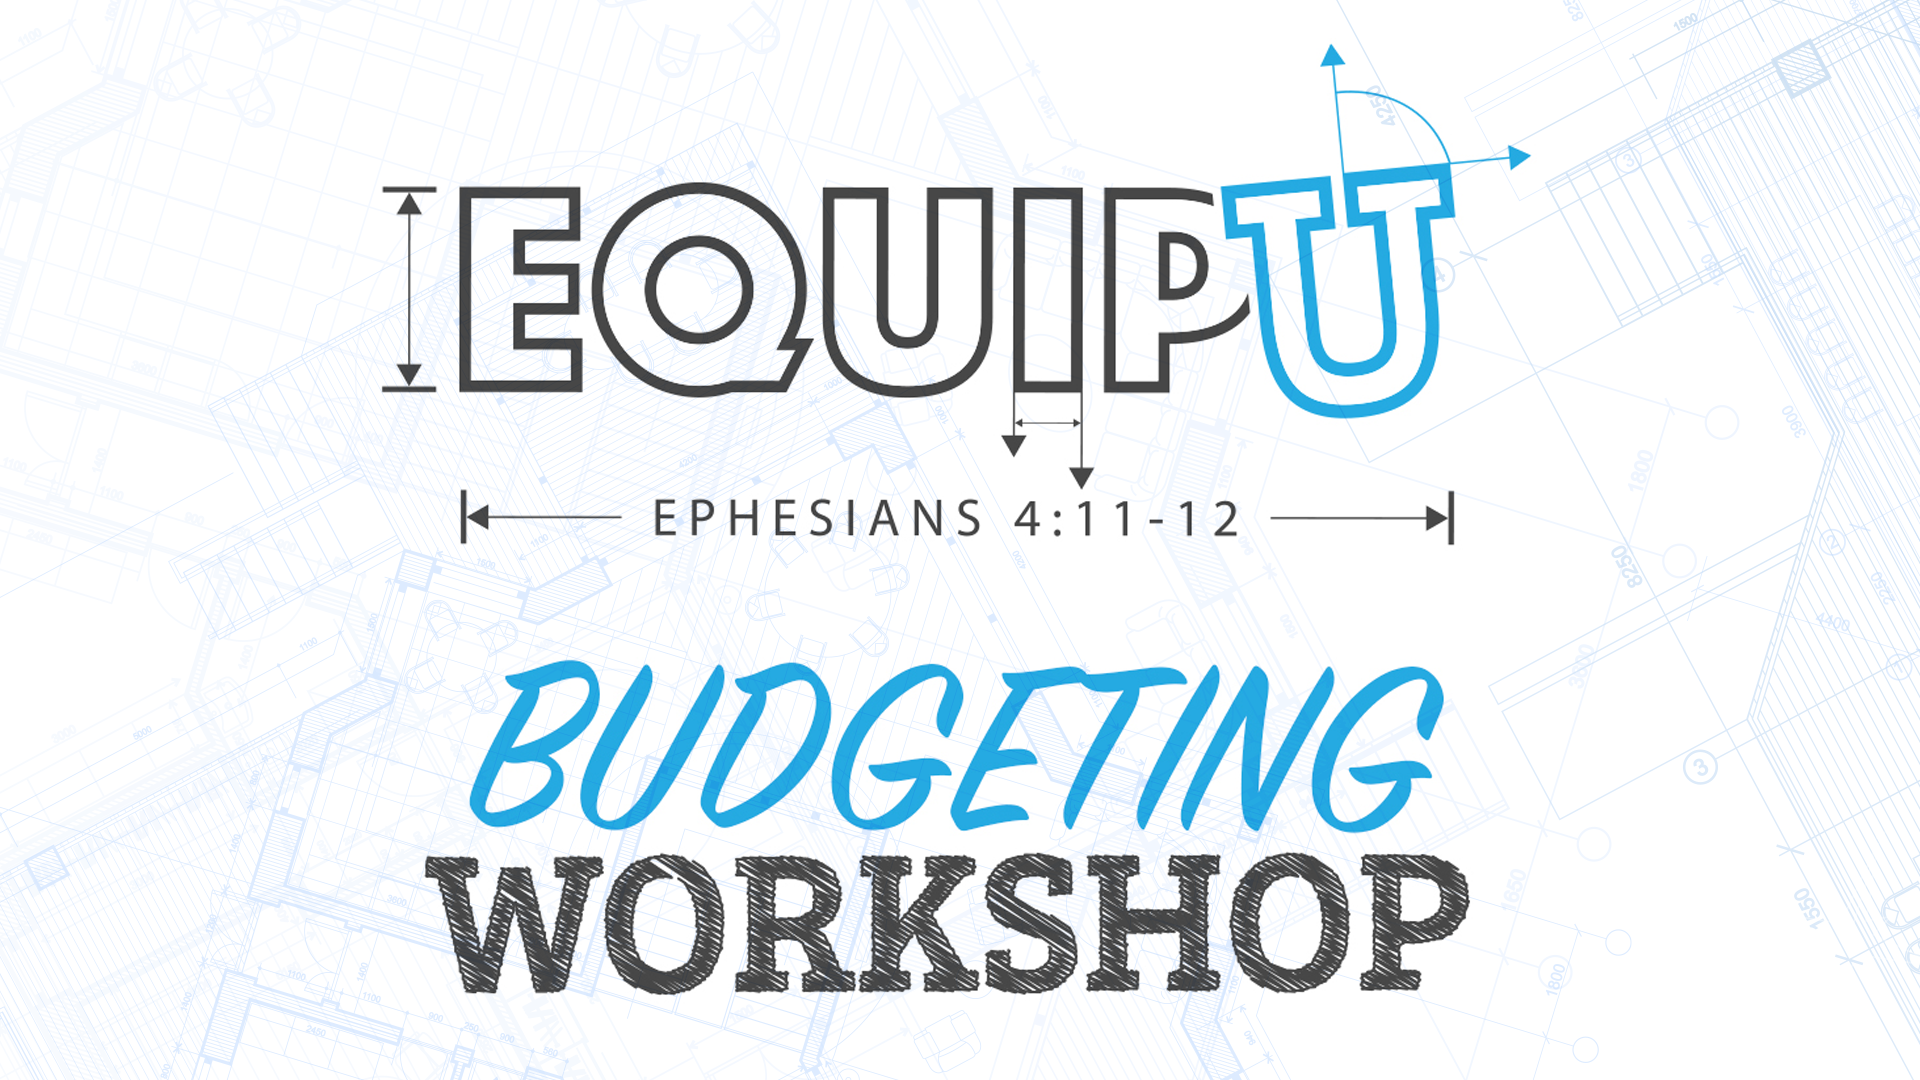 Equip U Budgeting Workshop - CrossCity